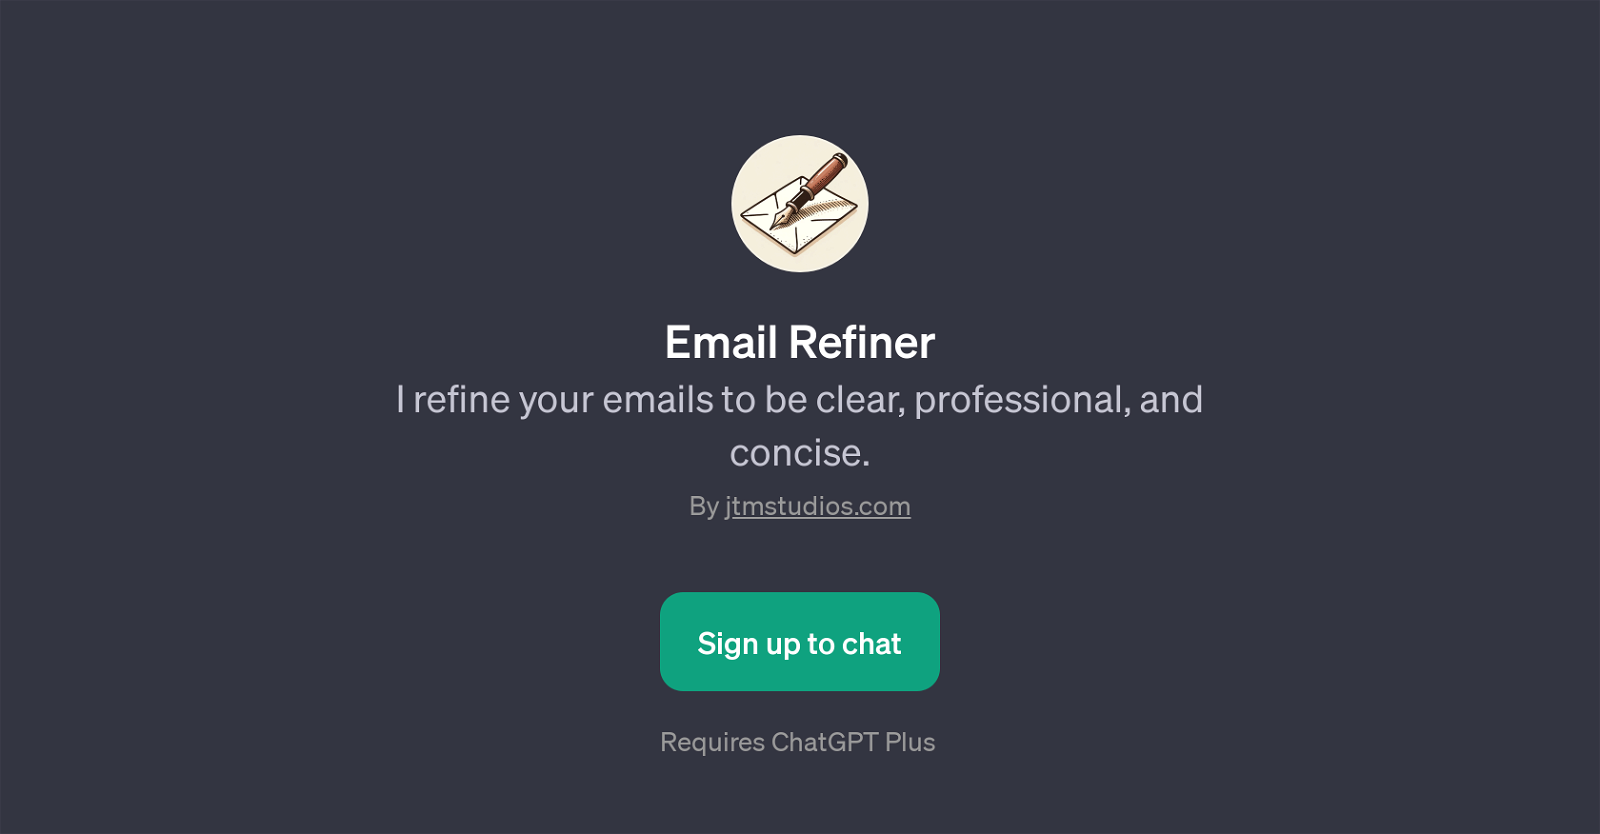 Email Refiner website